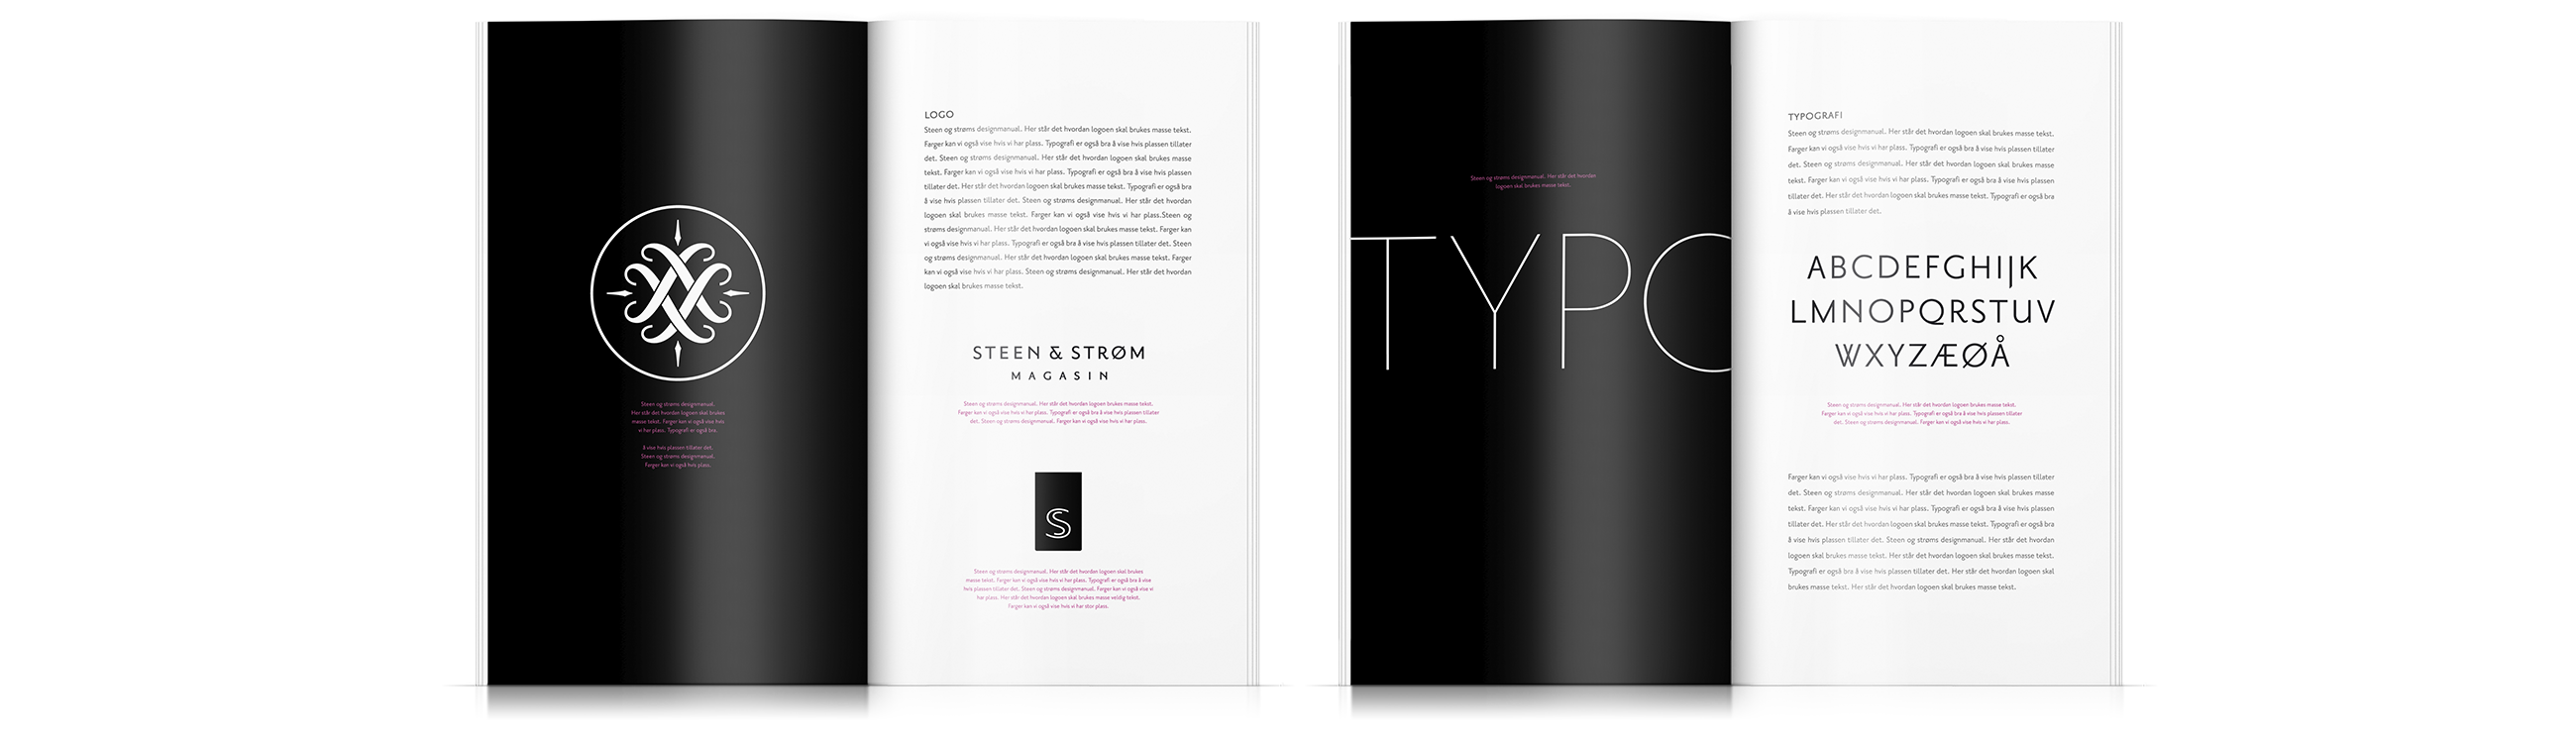 Steen&Strøm magasin magazine shopping oslo. Visuell identitet visual identity.